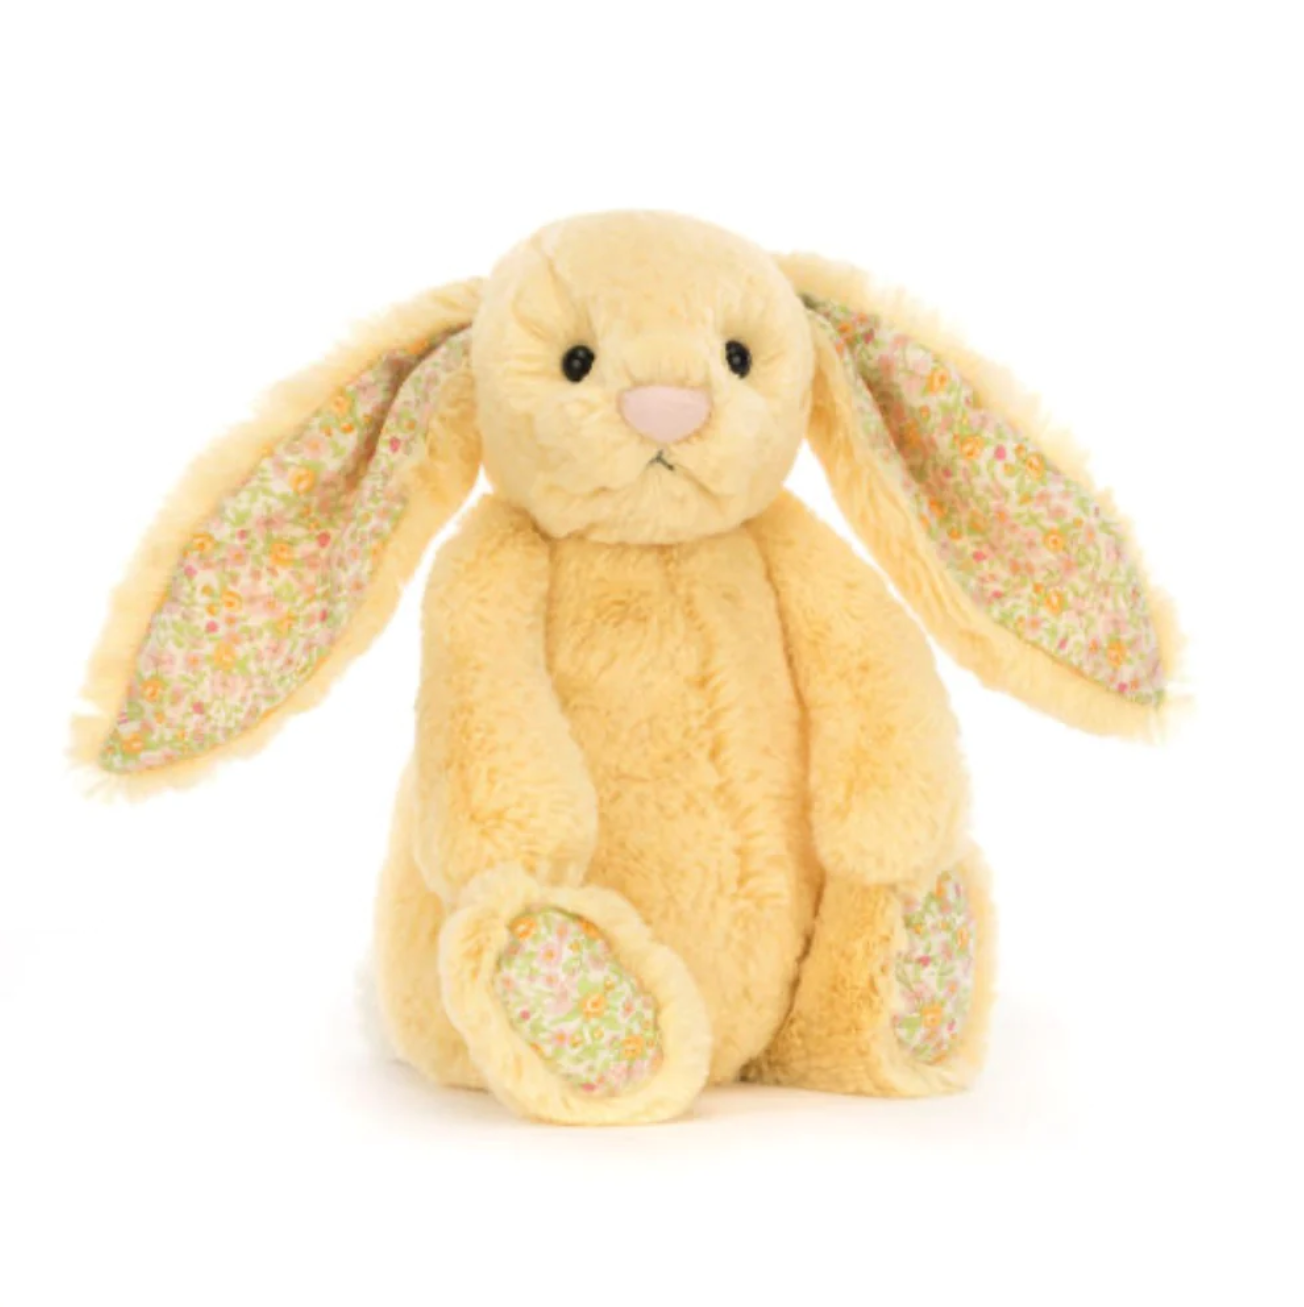 Jellycat Bashful Bunny Medium Soft Toys in Blossom Lemon at Wrapsody